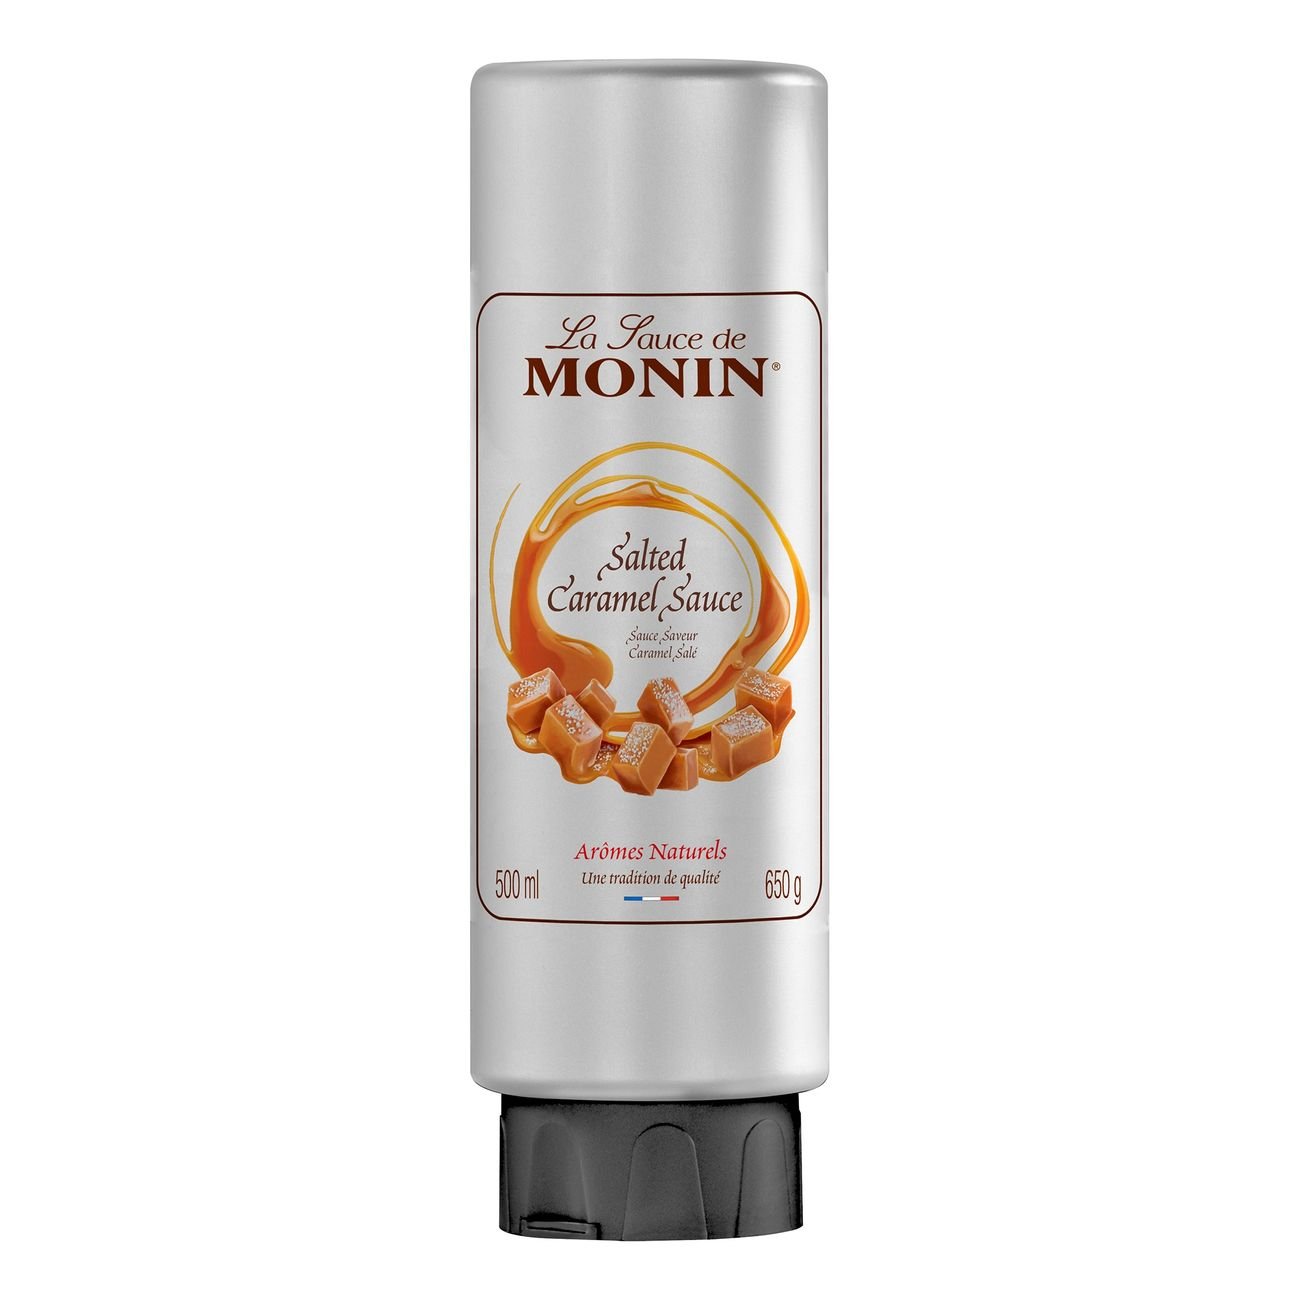 monin-salted-caramel-sauce-71401-2